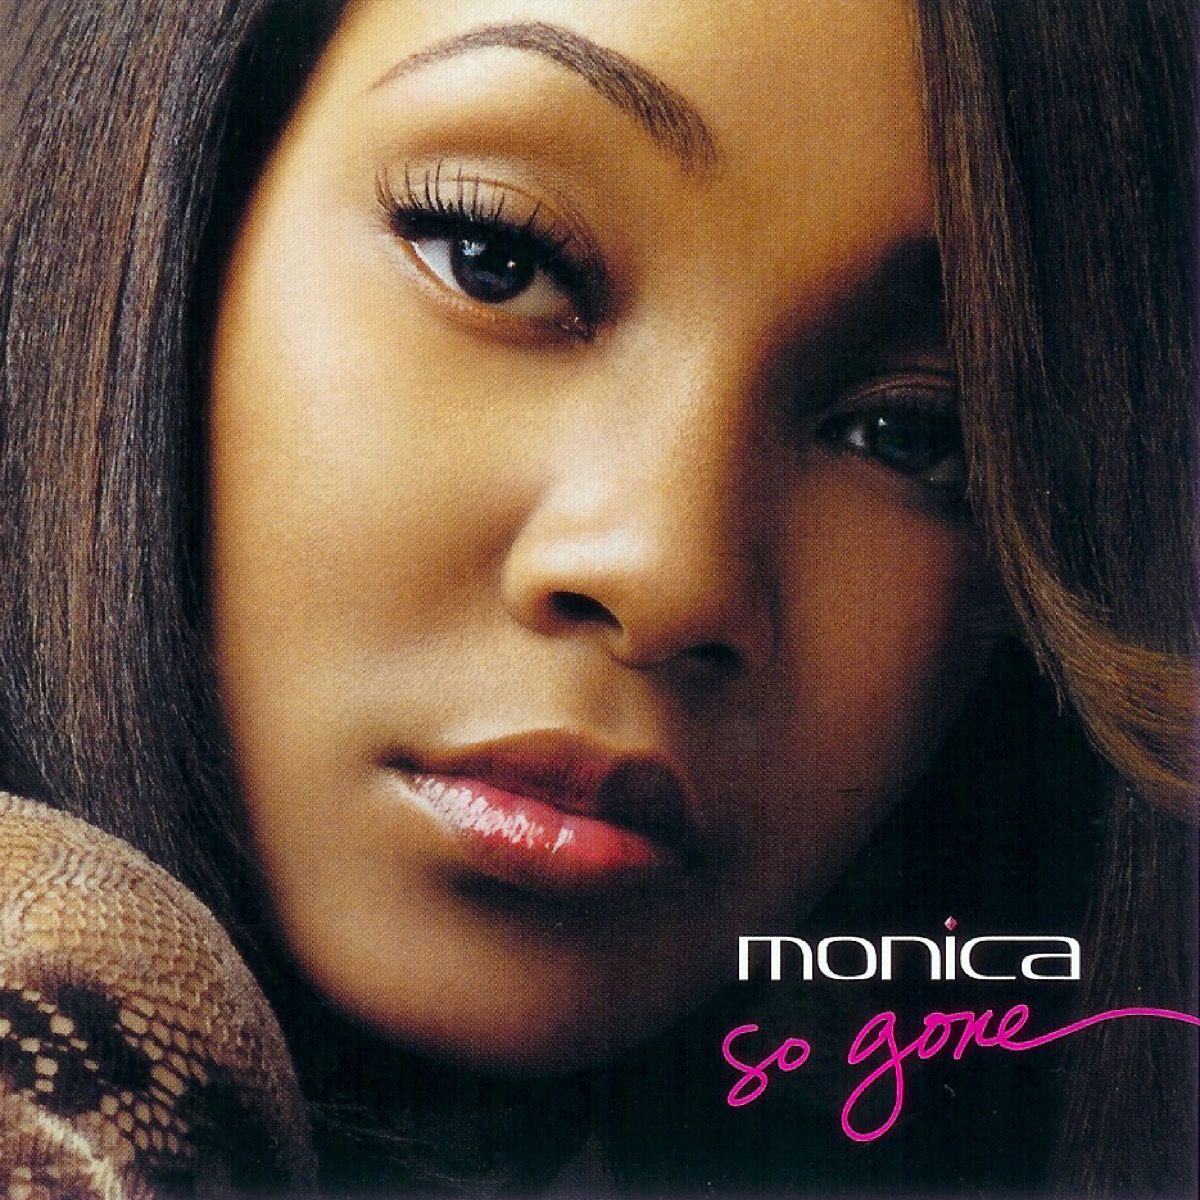 monica so gone single cover